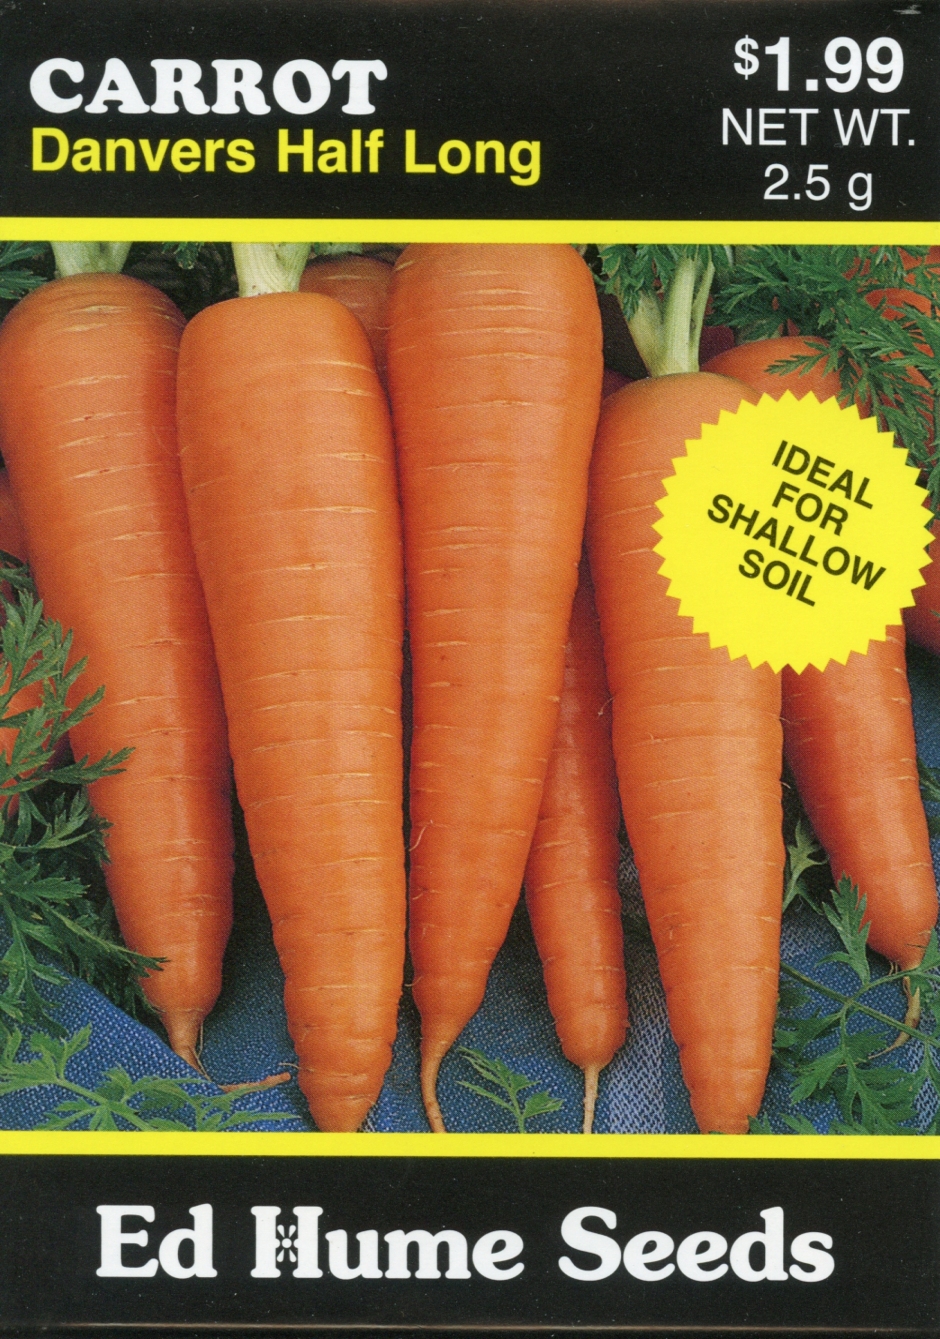 Carrot - Danvers Half Long